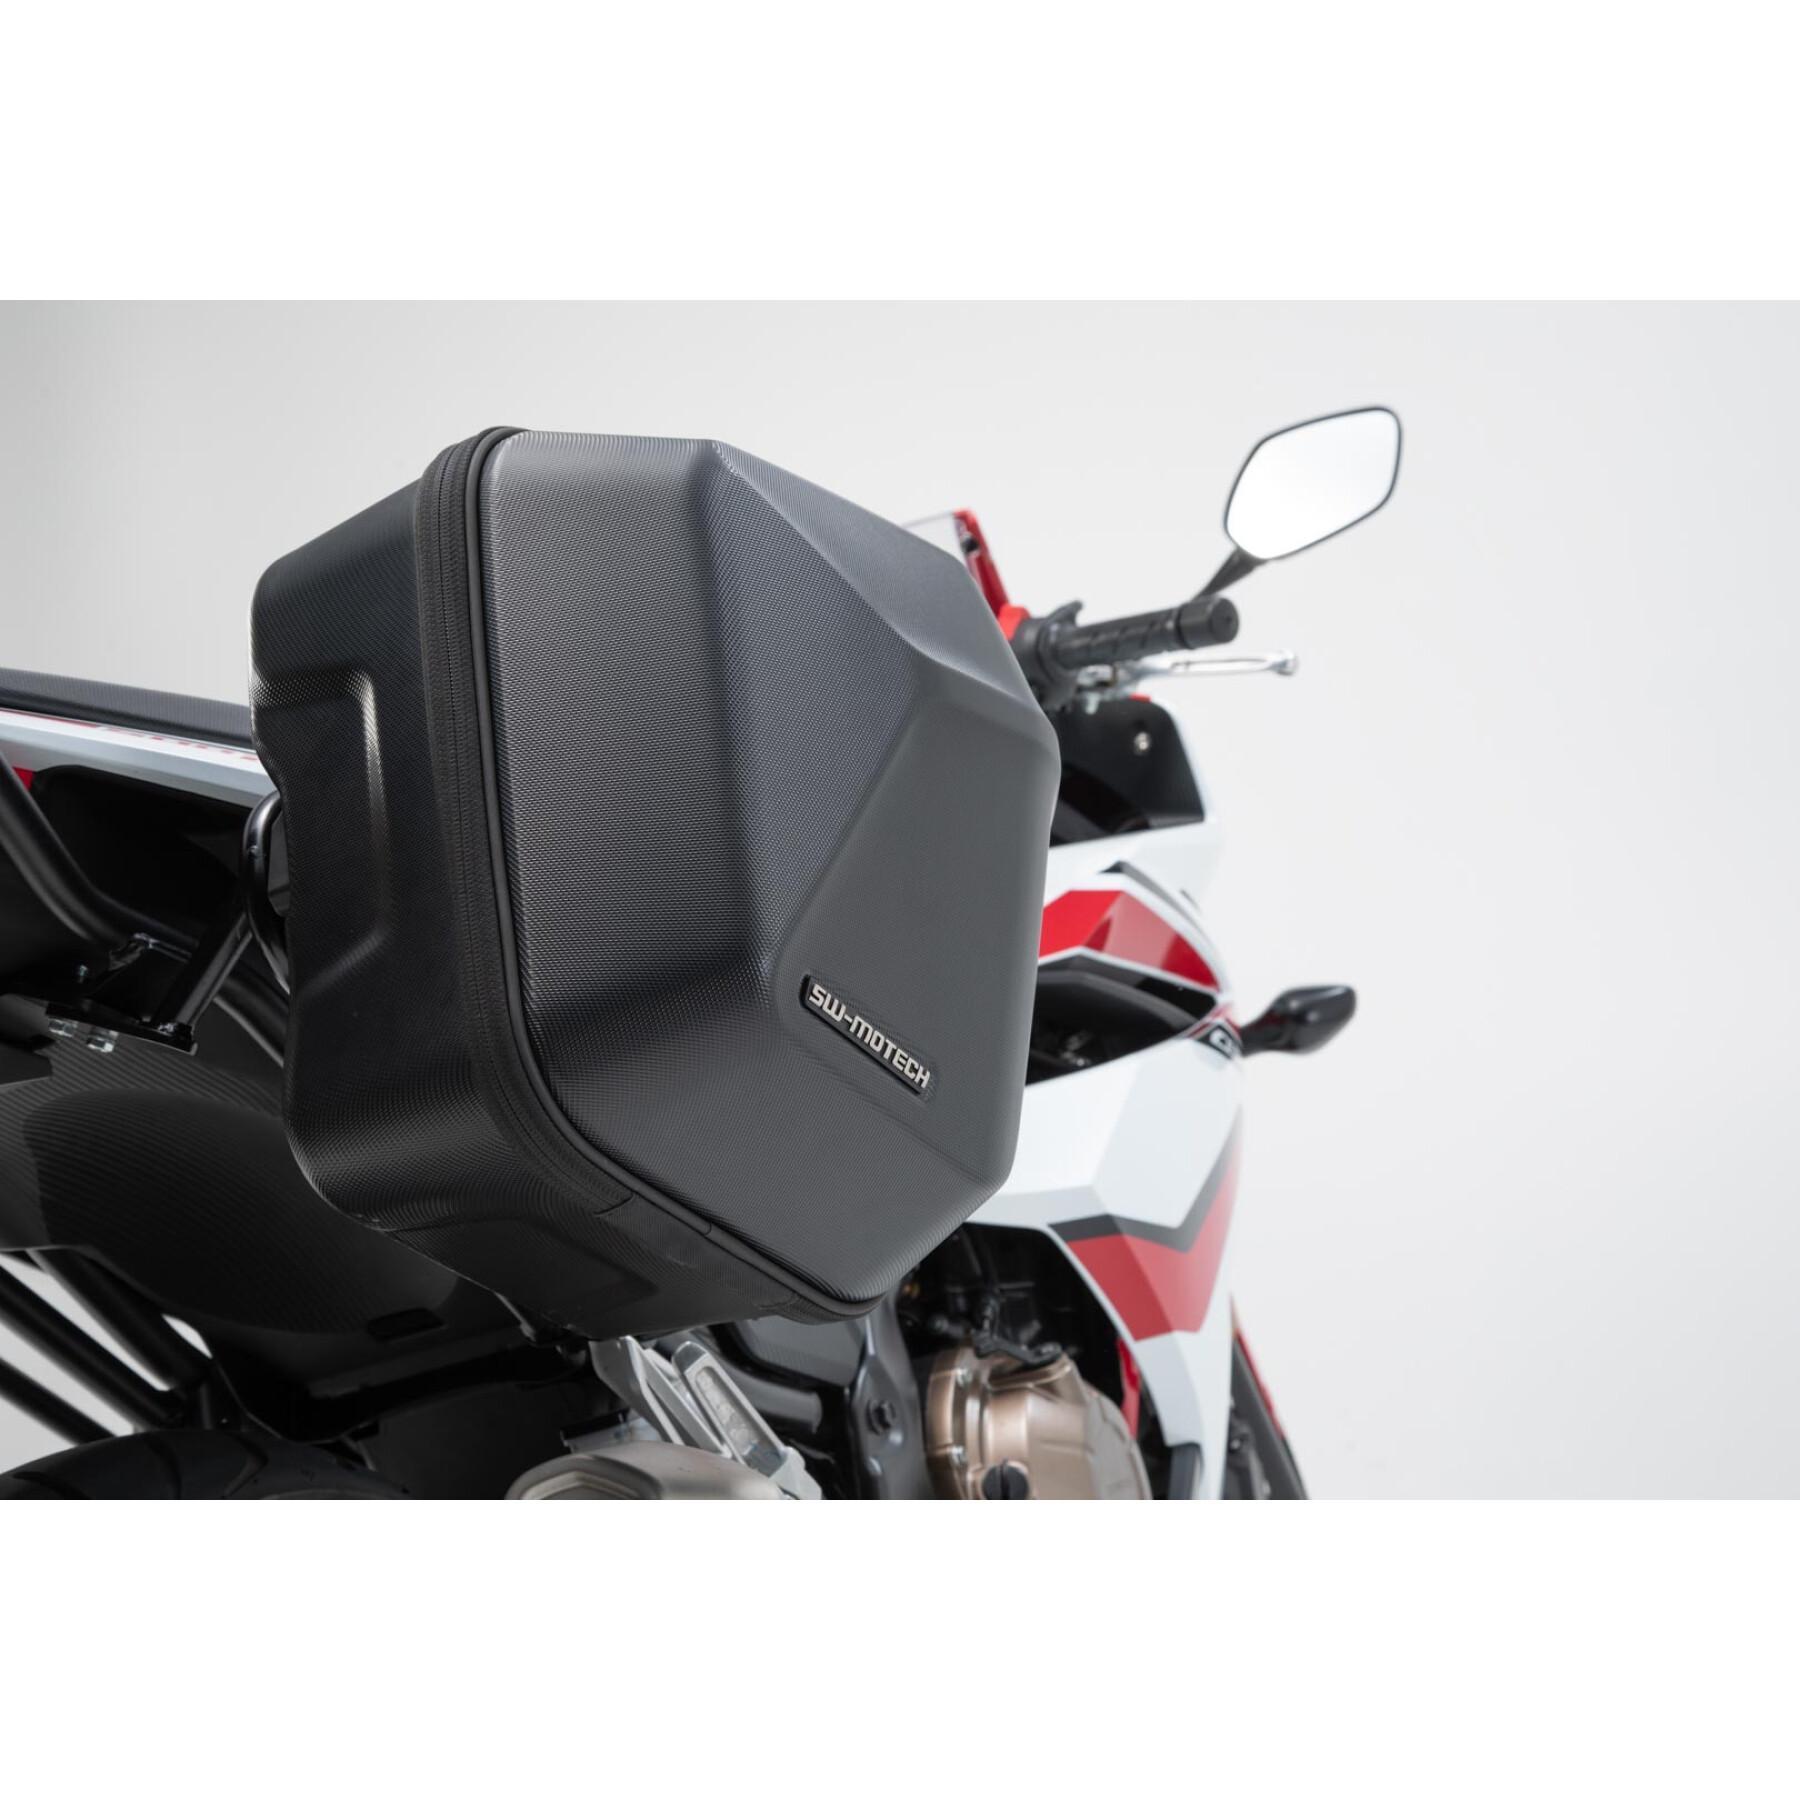 Motorfiets koffer kit SW-Motech URBAN ABS 2x 16,5 l.Honda CB500F (16-18)/ CBR500R (16-18).